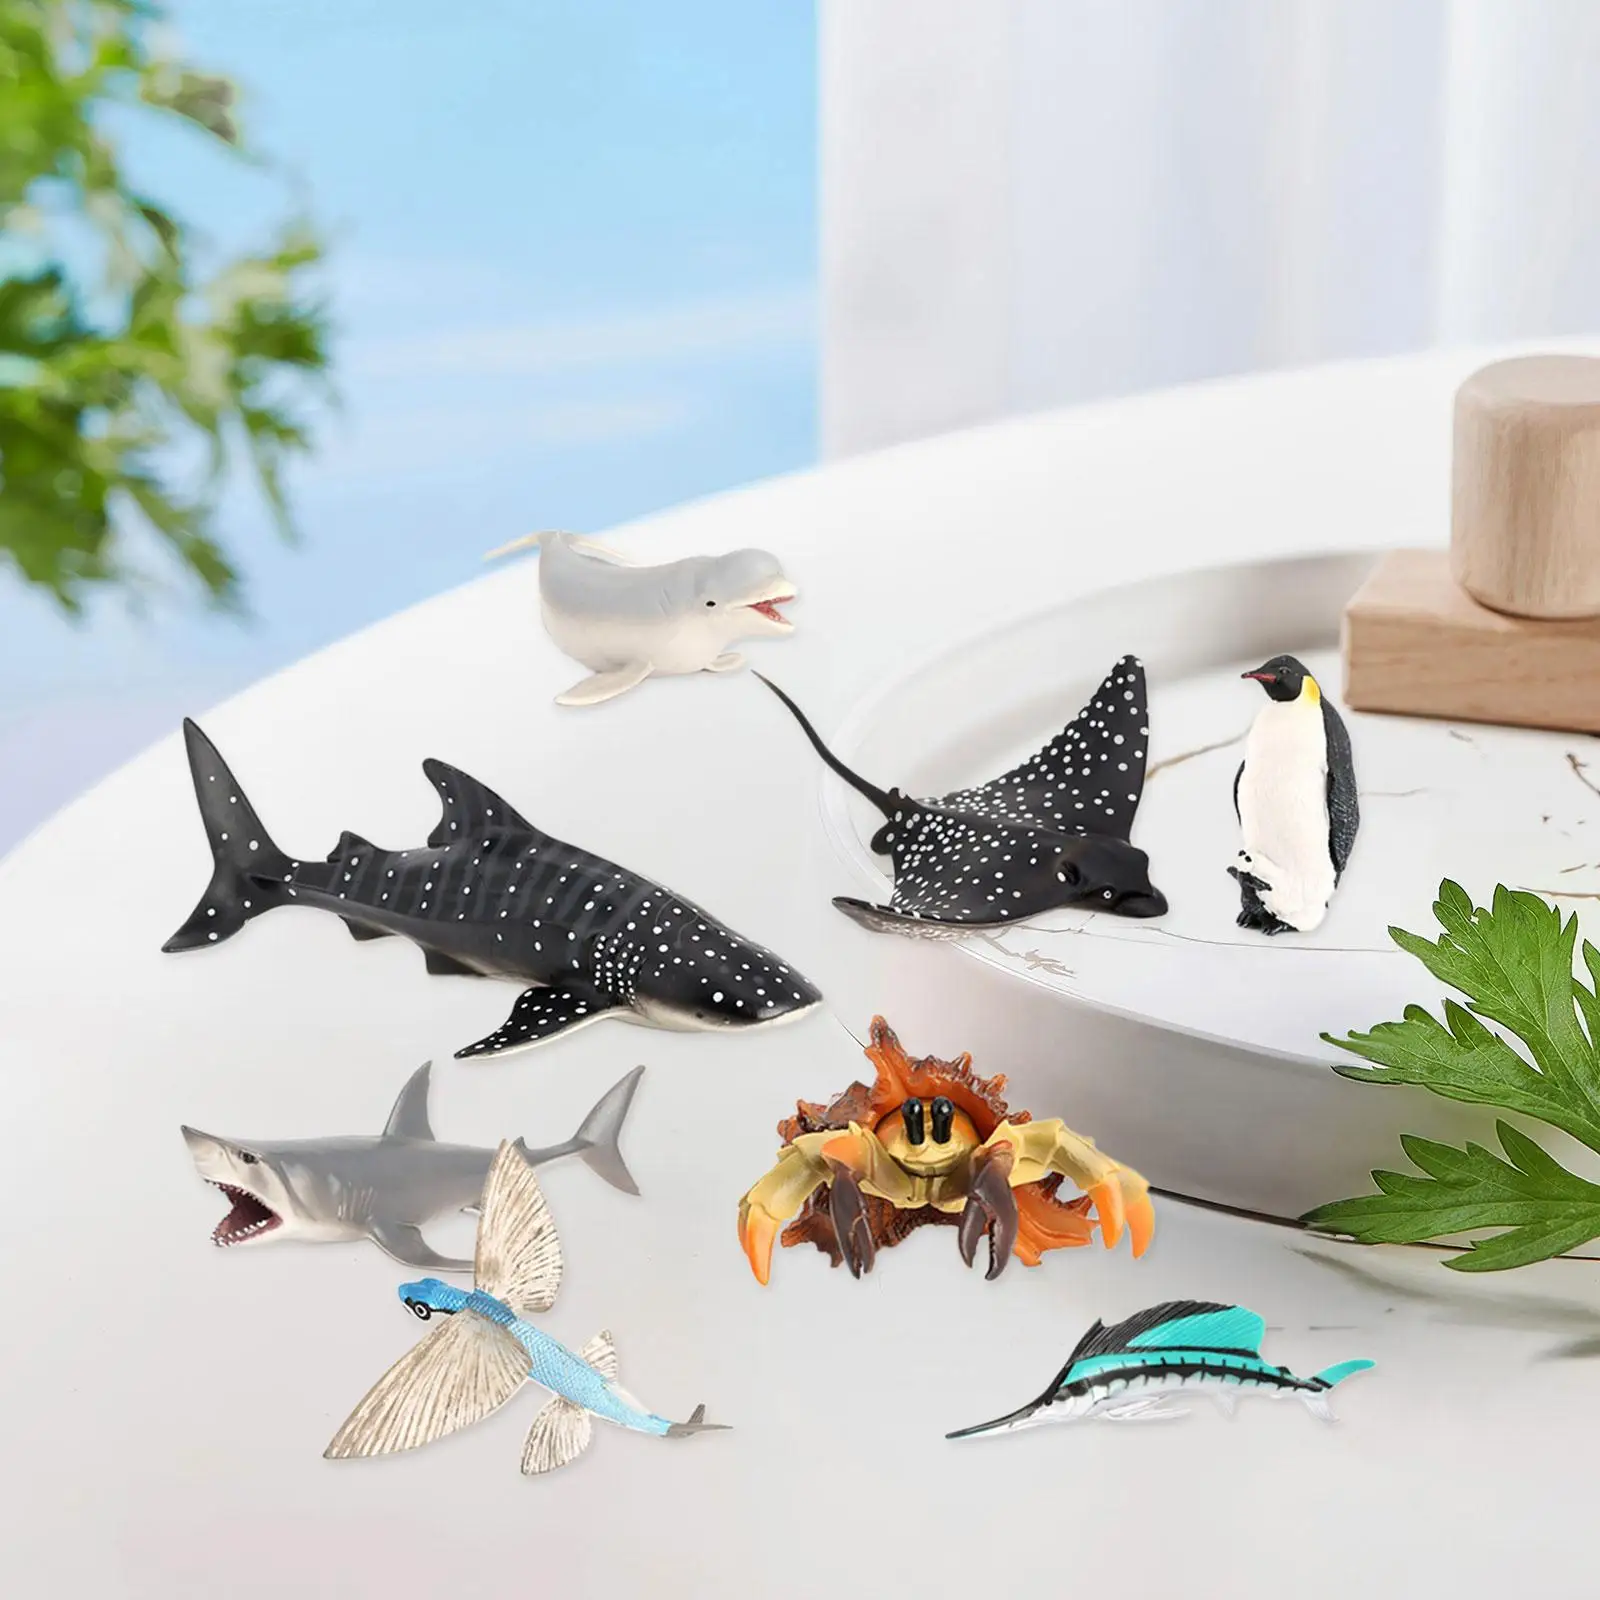 

8x Marine Animal Model Realistic Deep Sea Animal Figurines Simulation Sea Life Creatures Toys for Gift Cake Toppers Desktop